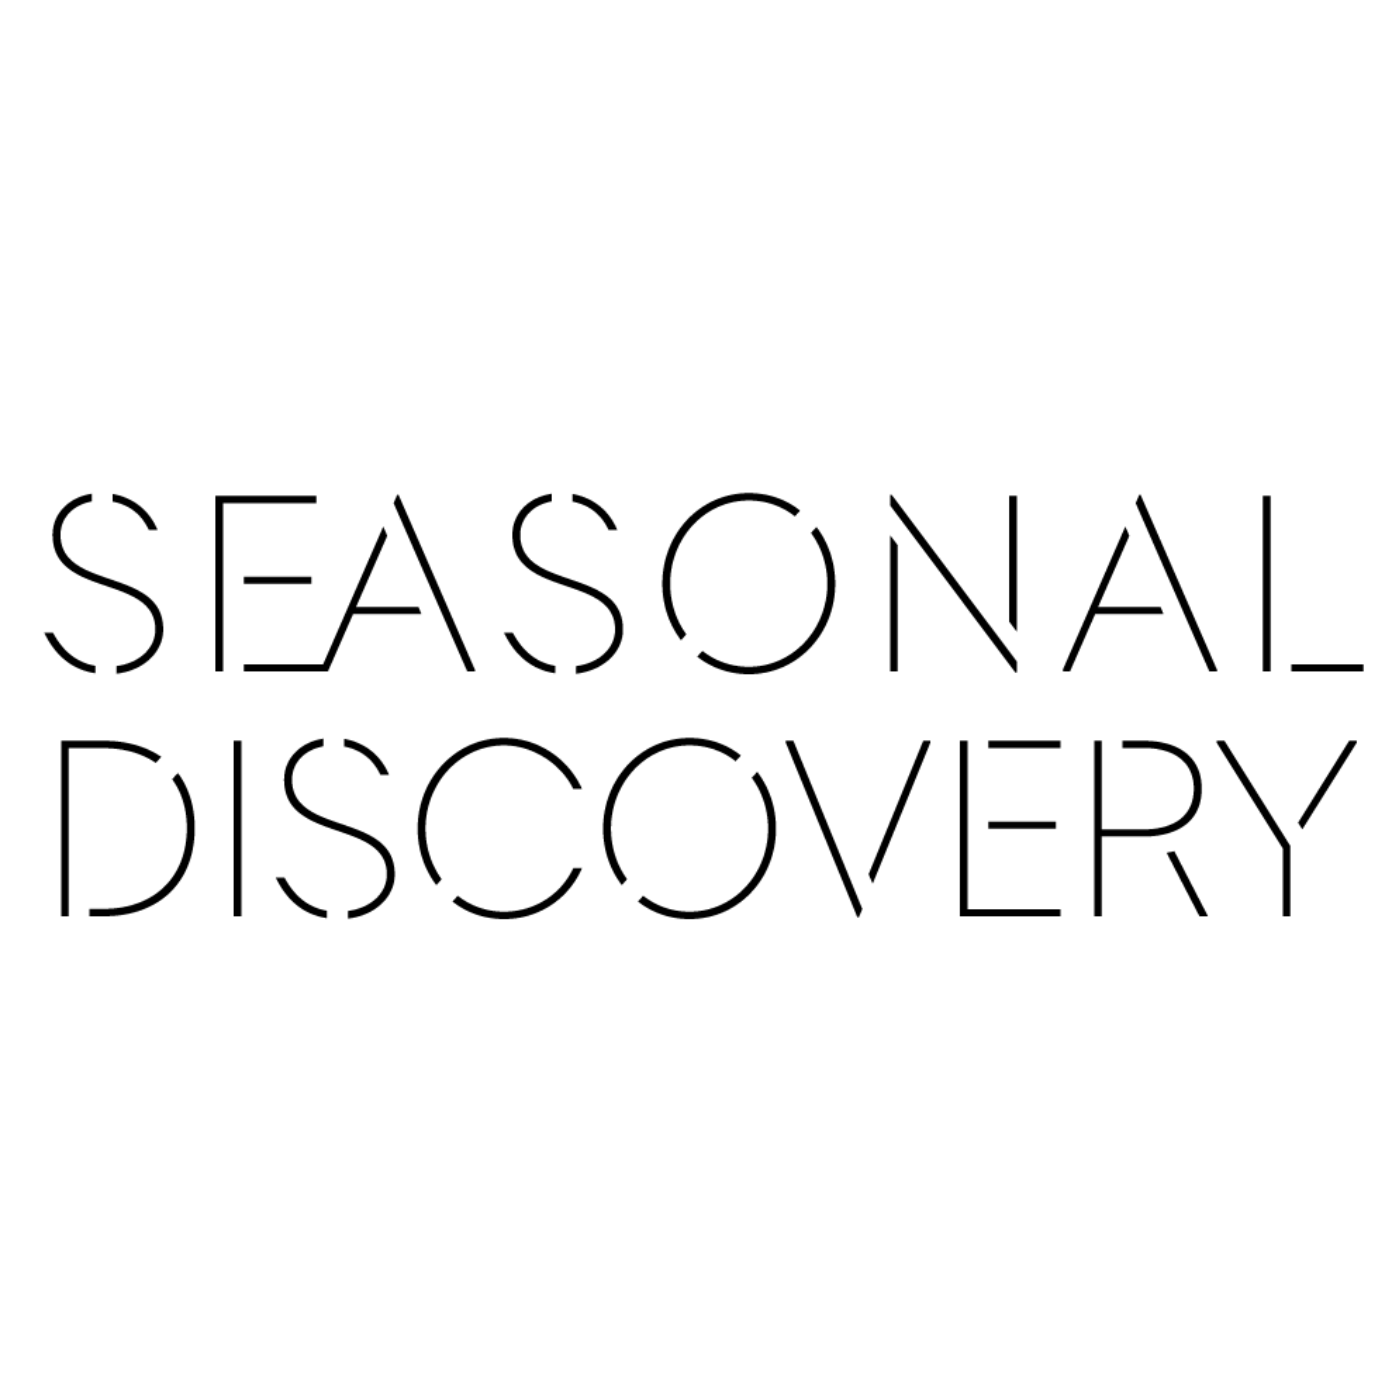 Seasonal Discovery